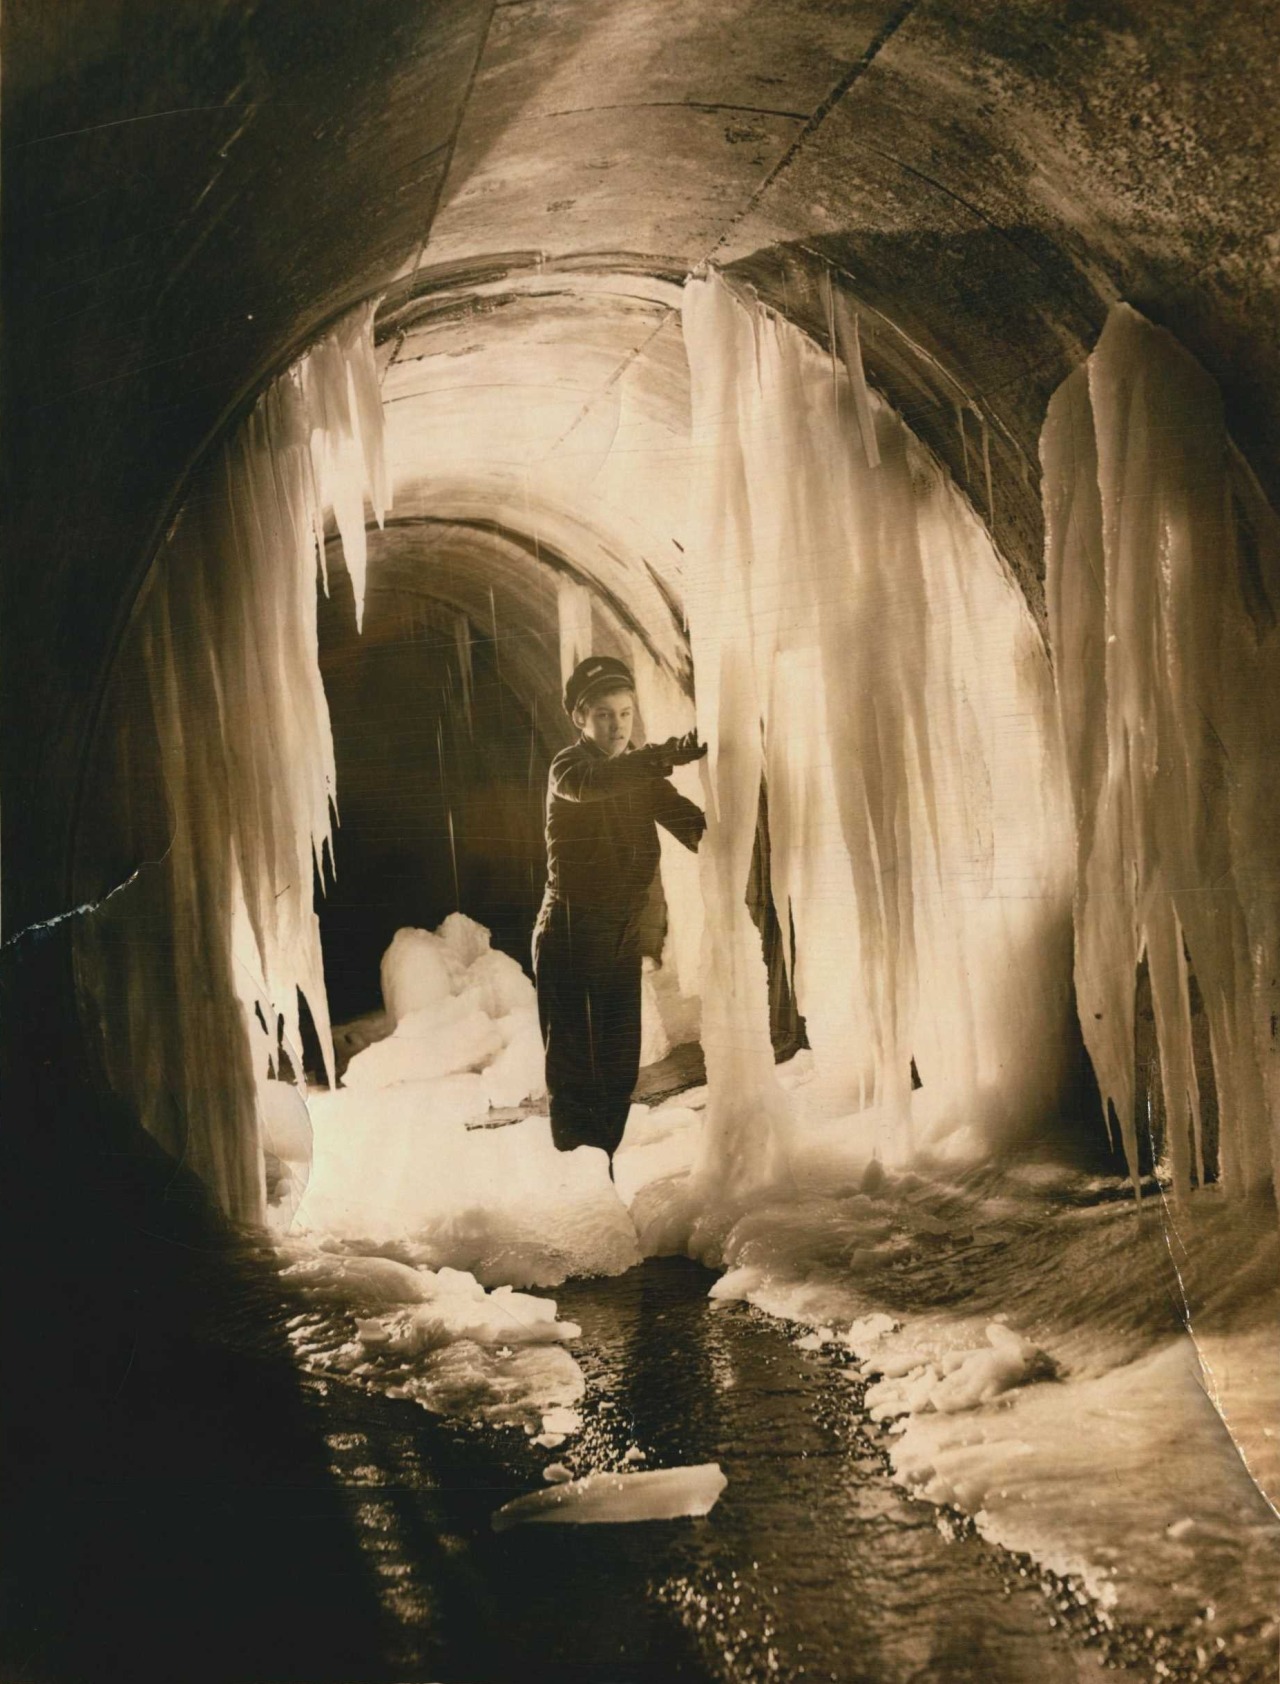 http://stuffaboutminneapolis.tumblr.com/post/135993657464/hclib-exploring-a-winter-wonderland-the-sewers